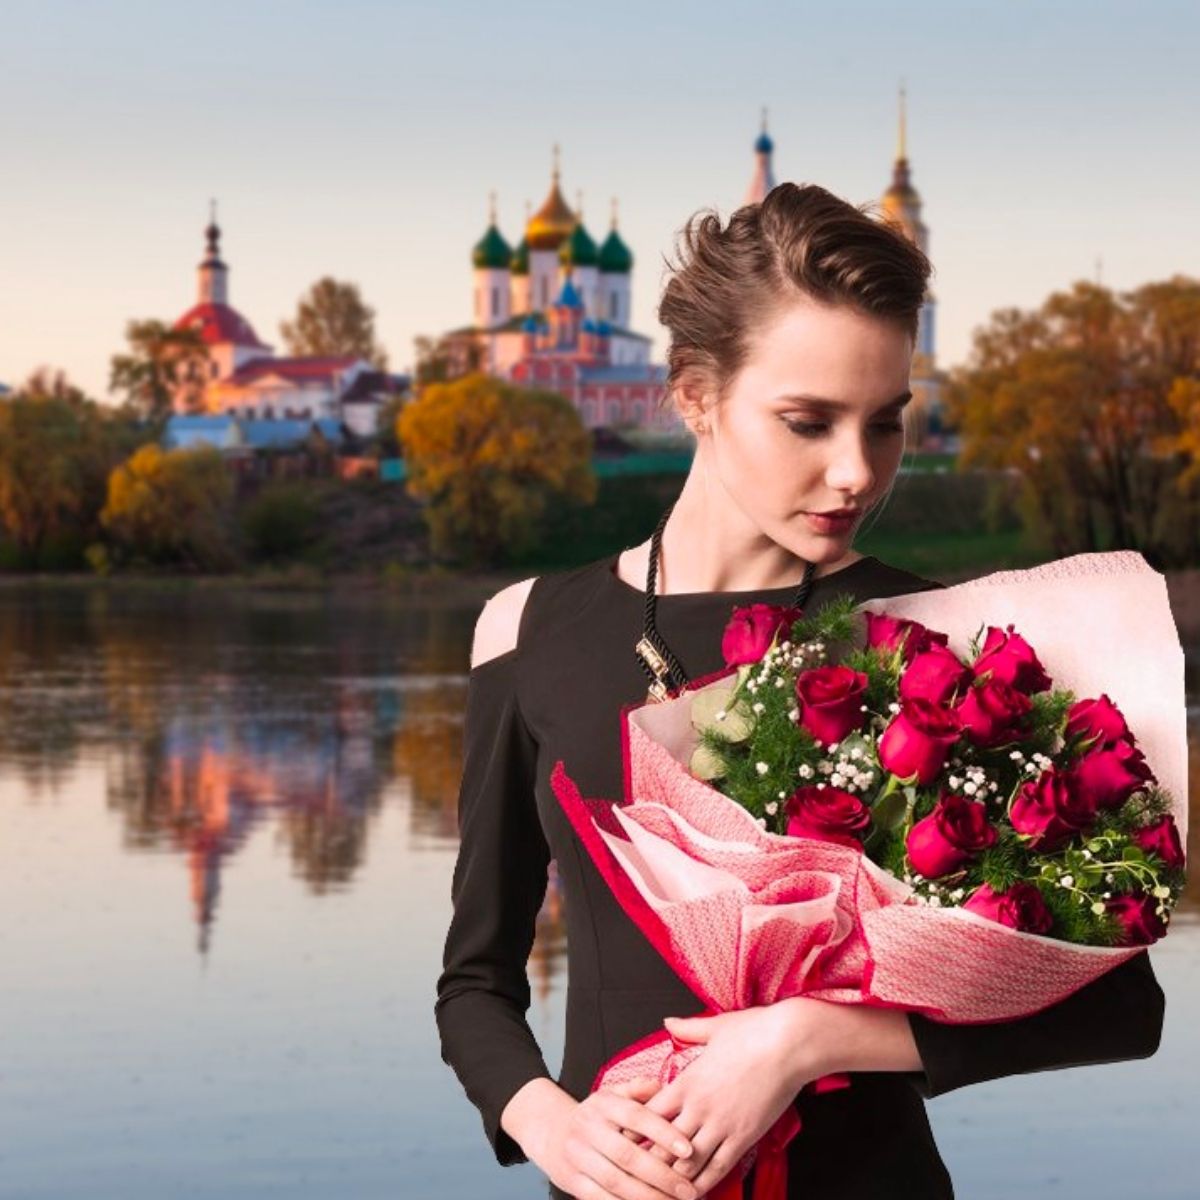 Flowers in Russia - on Thursd.